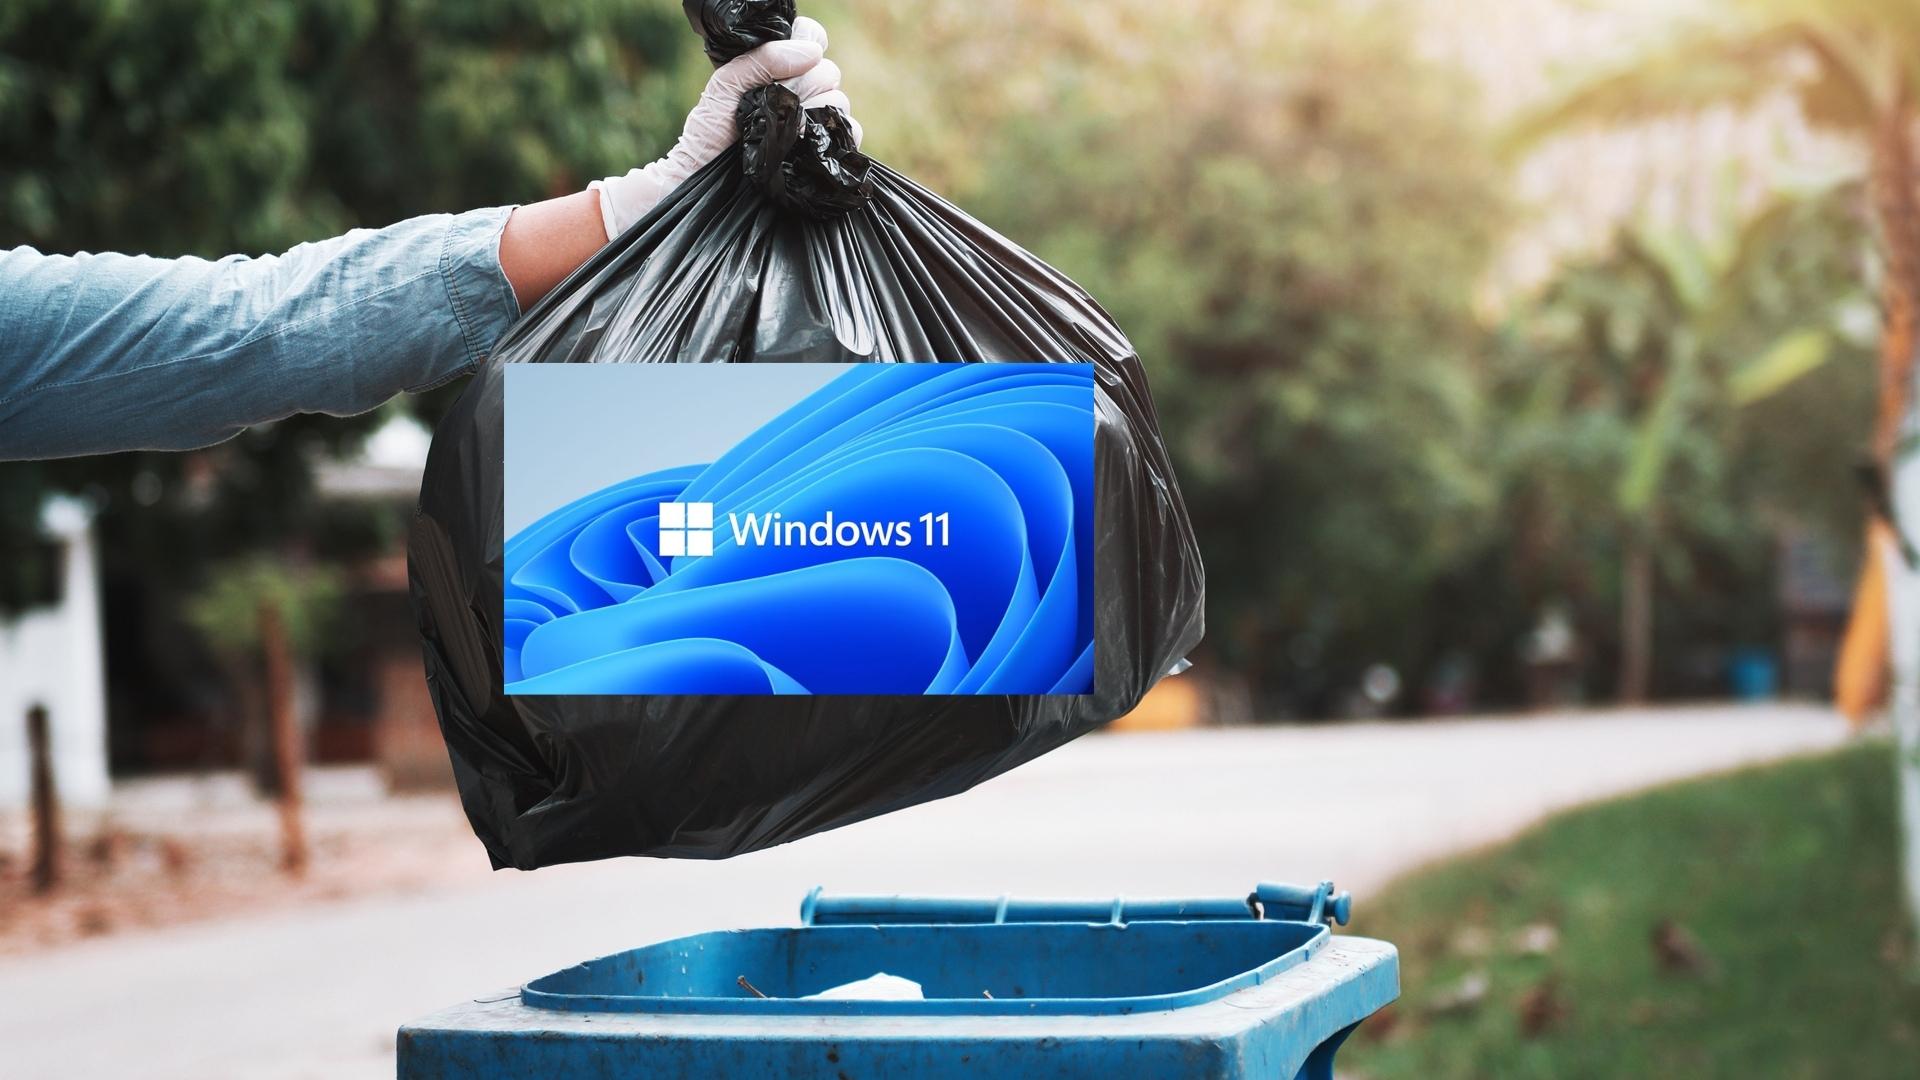 Someone put a trash can labeled Windows 11 in a bin.